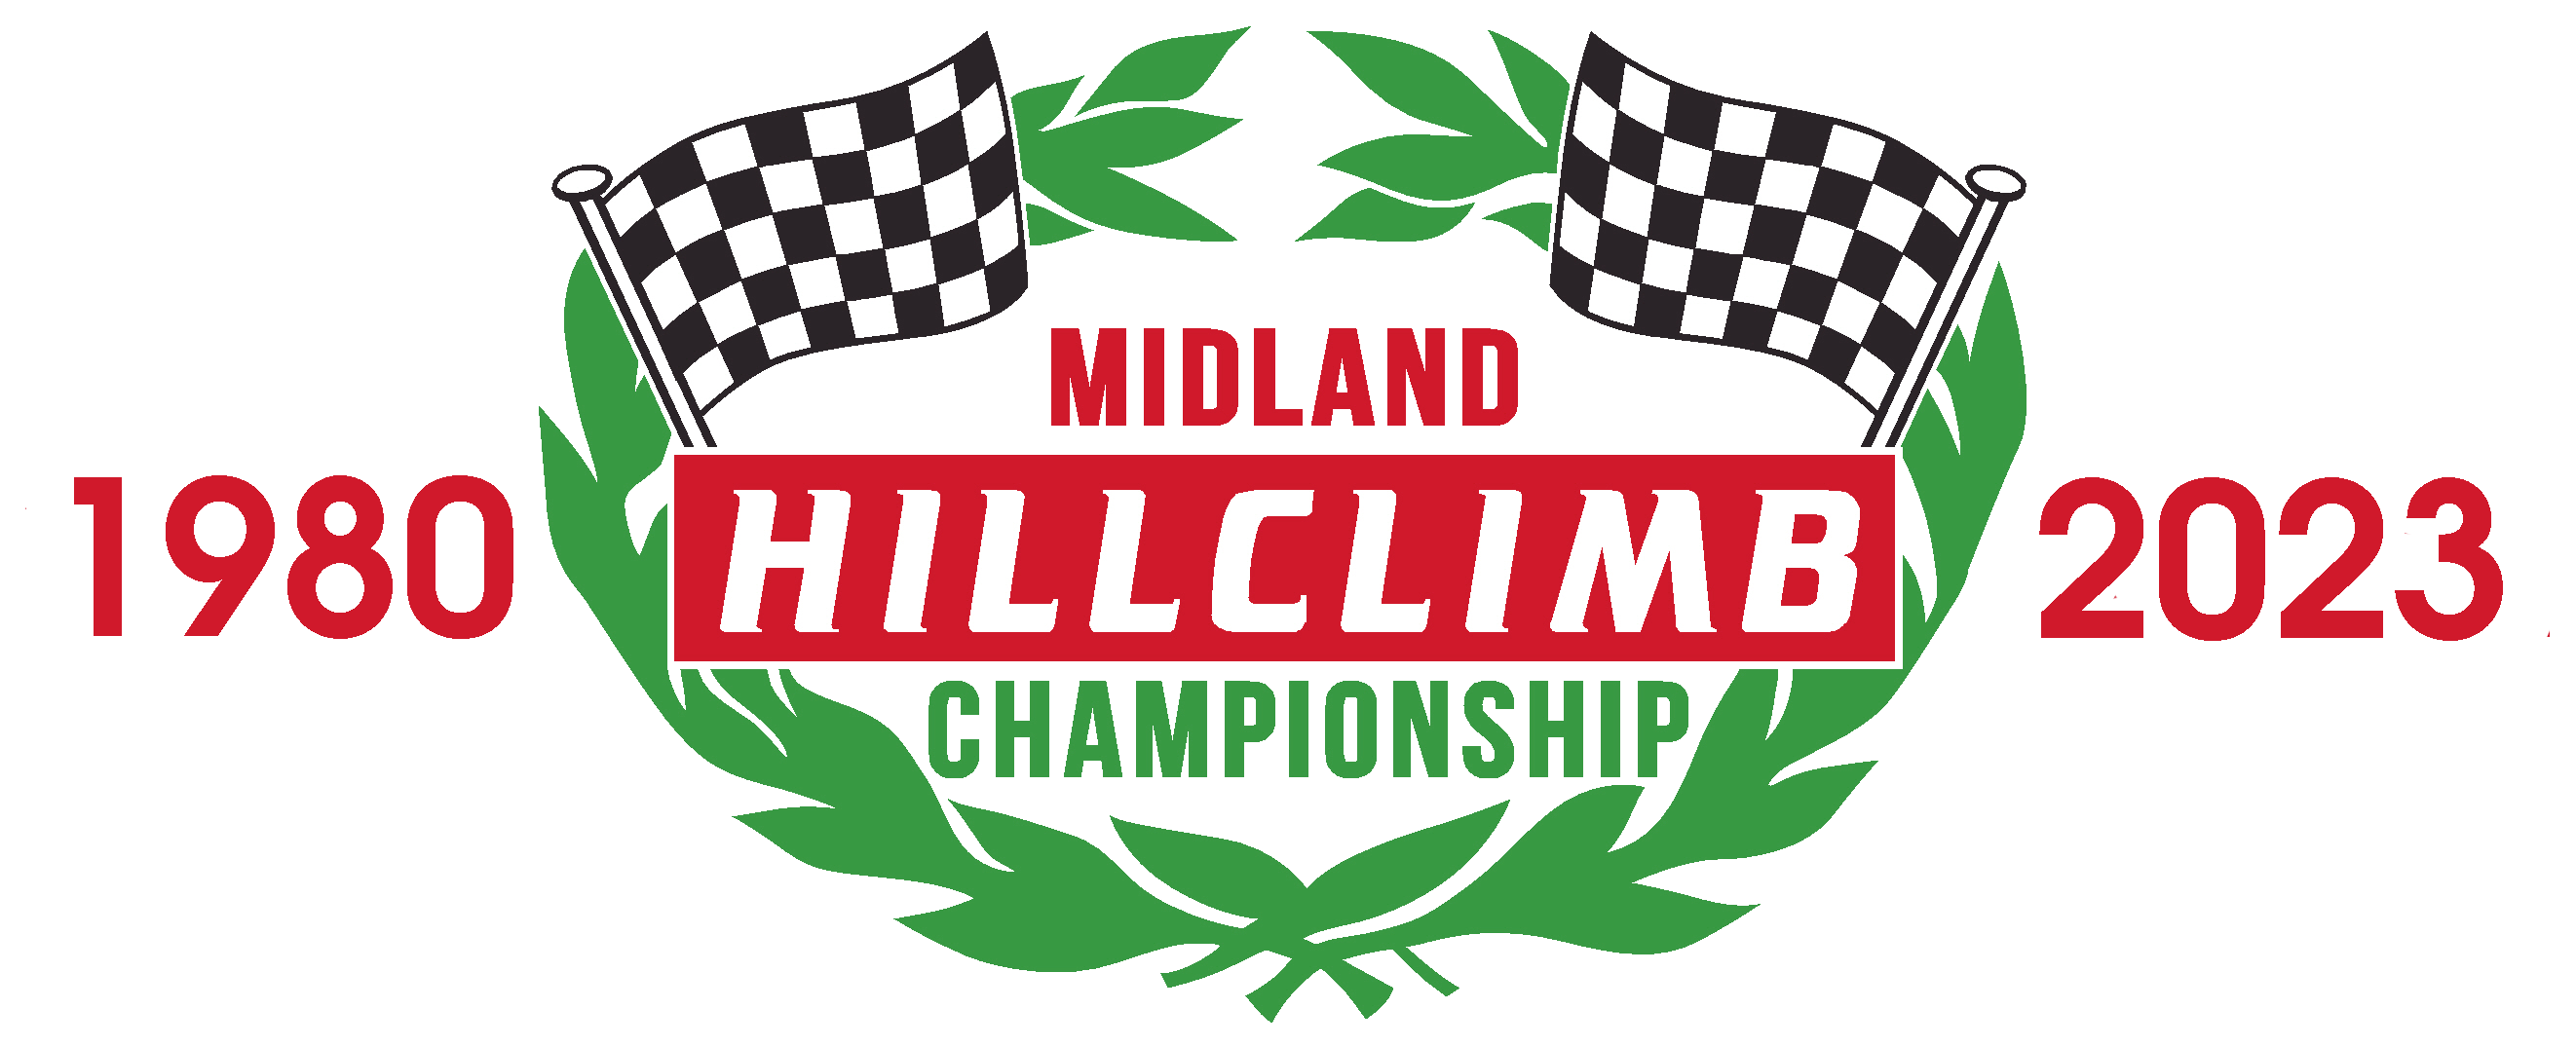 Midland Hillclimb 2023 logo